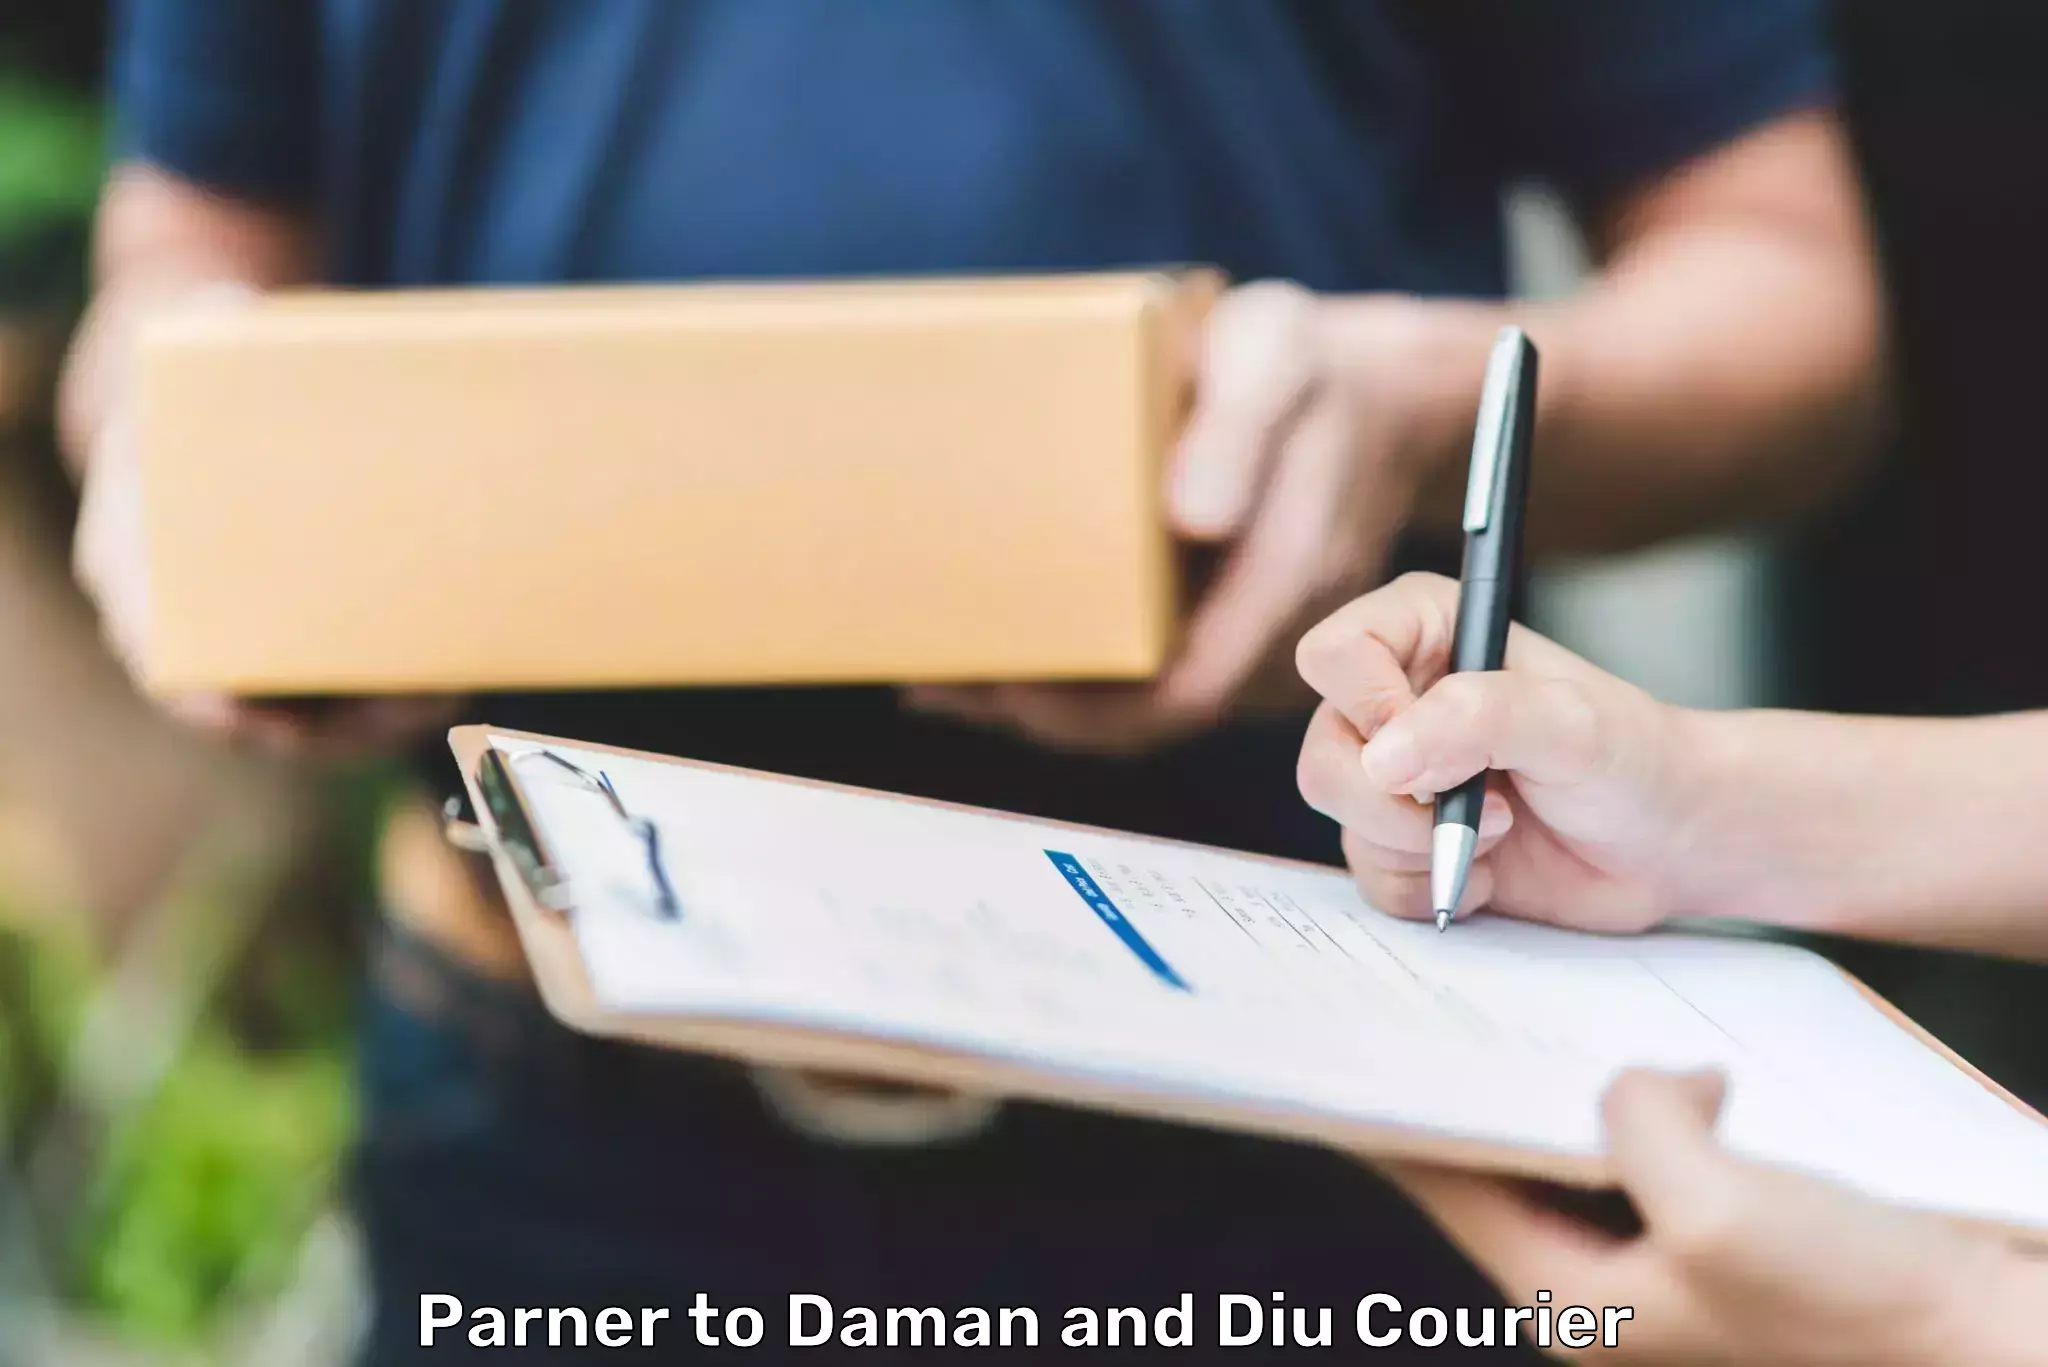 Efficient order fulfillment Parner to Daman